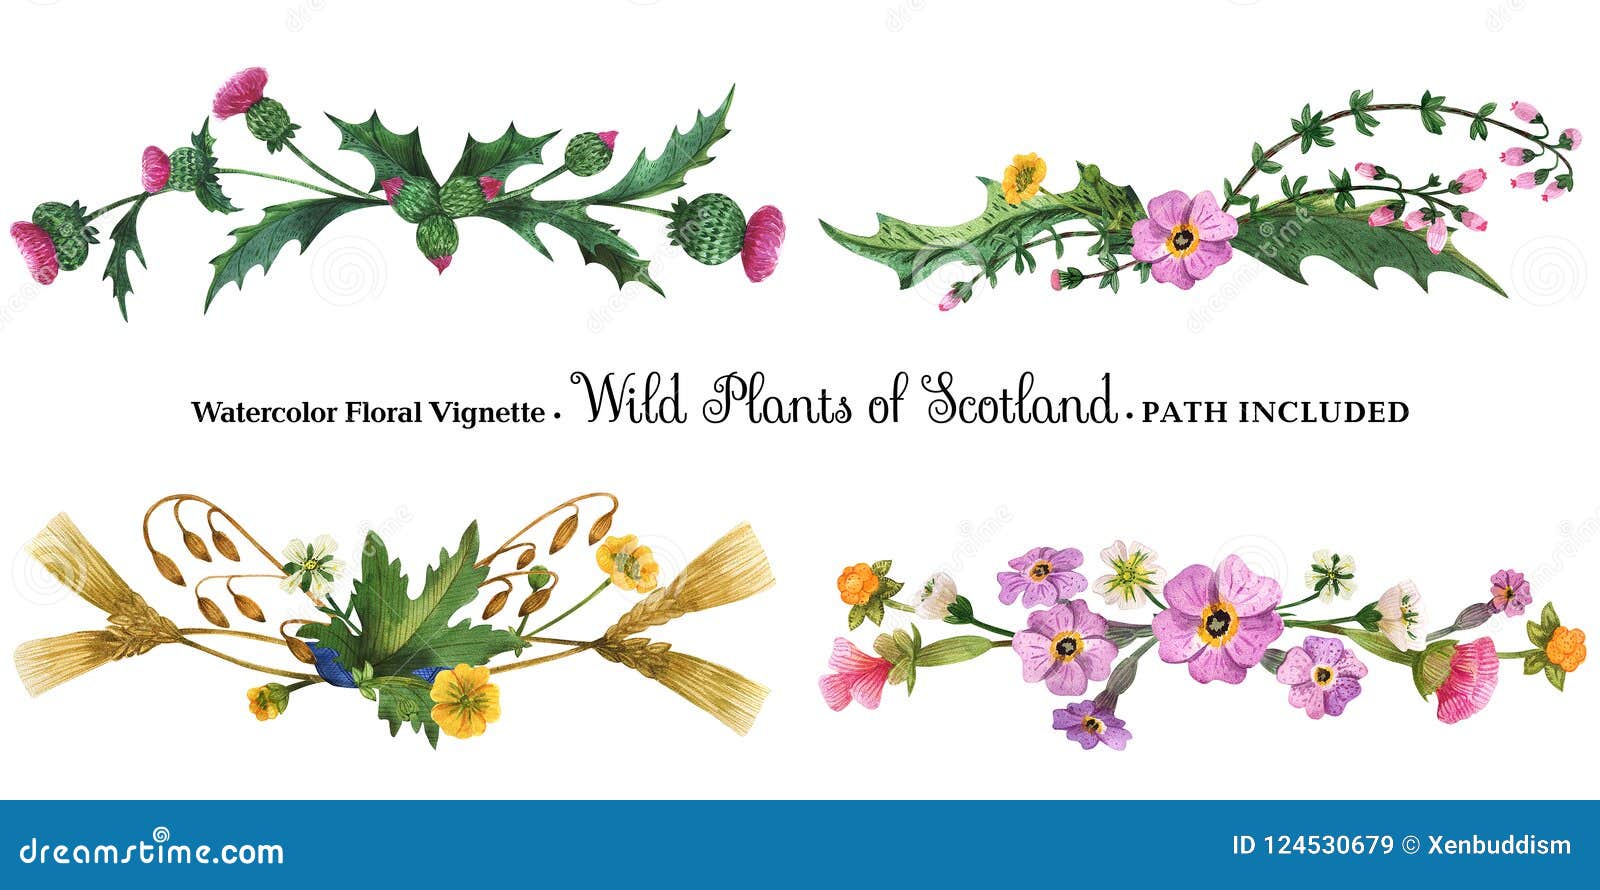 vignette from wild plants of scotland